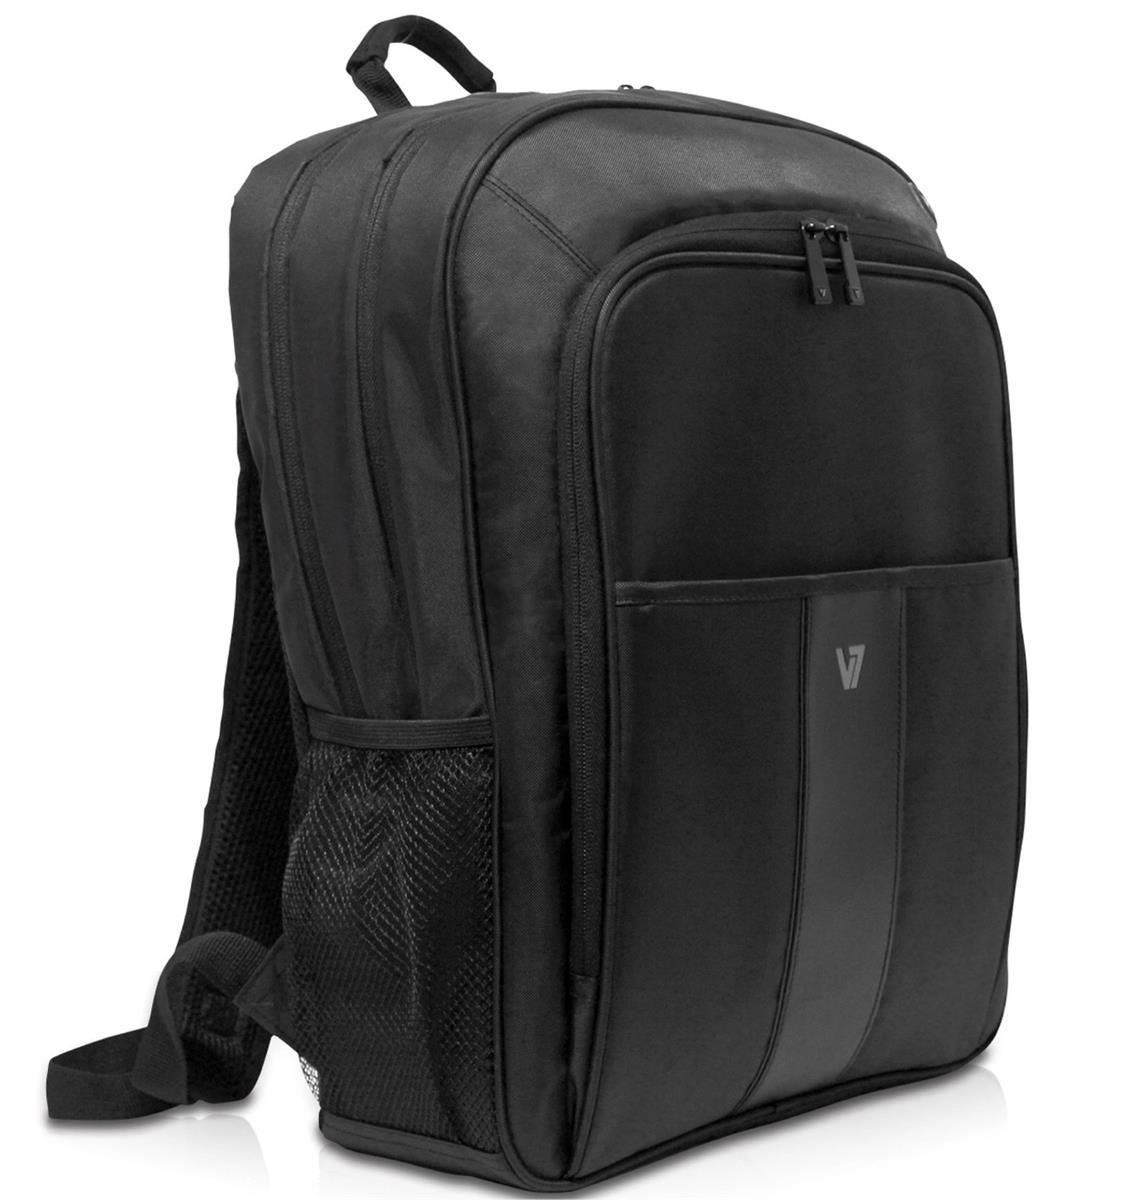 V7 Professional II Laptop Backpack for 17.3 inch Laptops - CBP22-9E ...